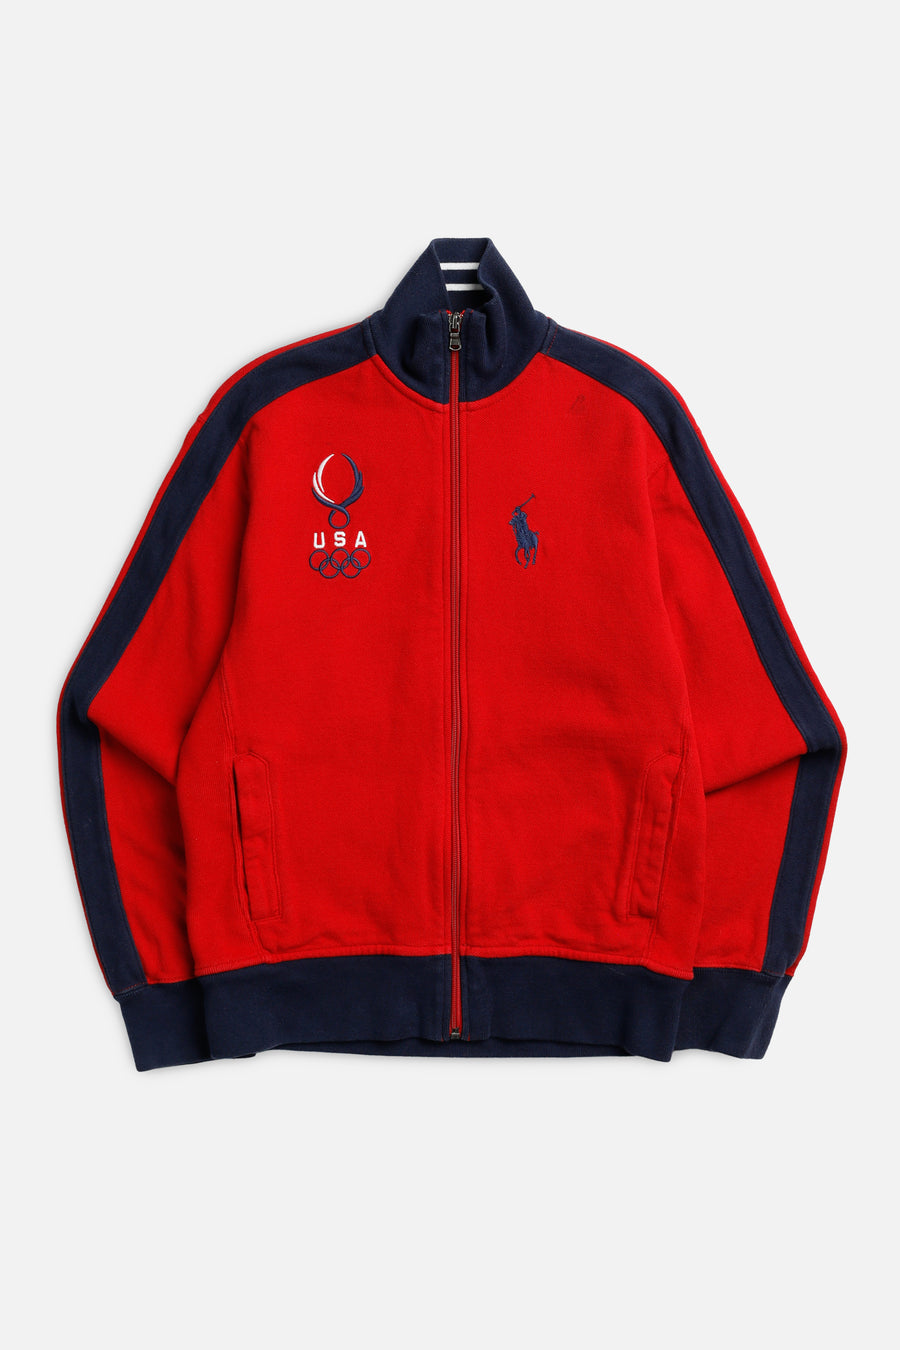 Vintage Olympics USA Track Jacket - XS